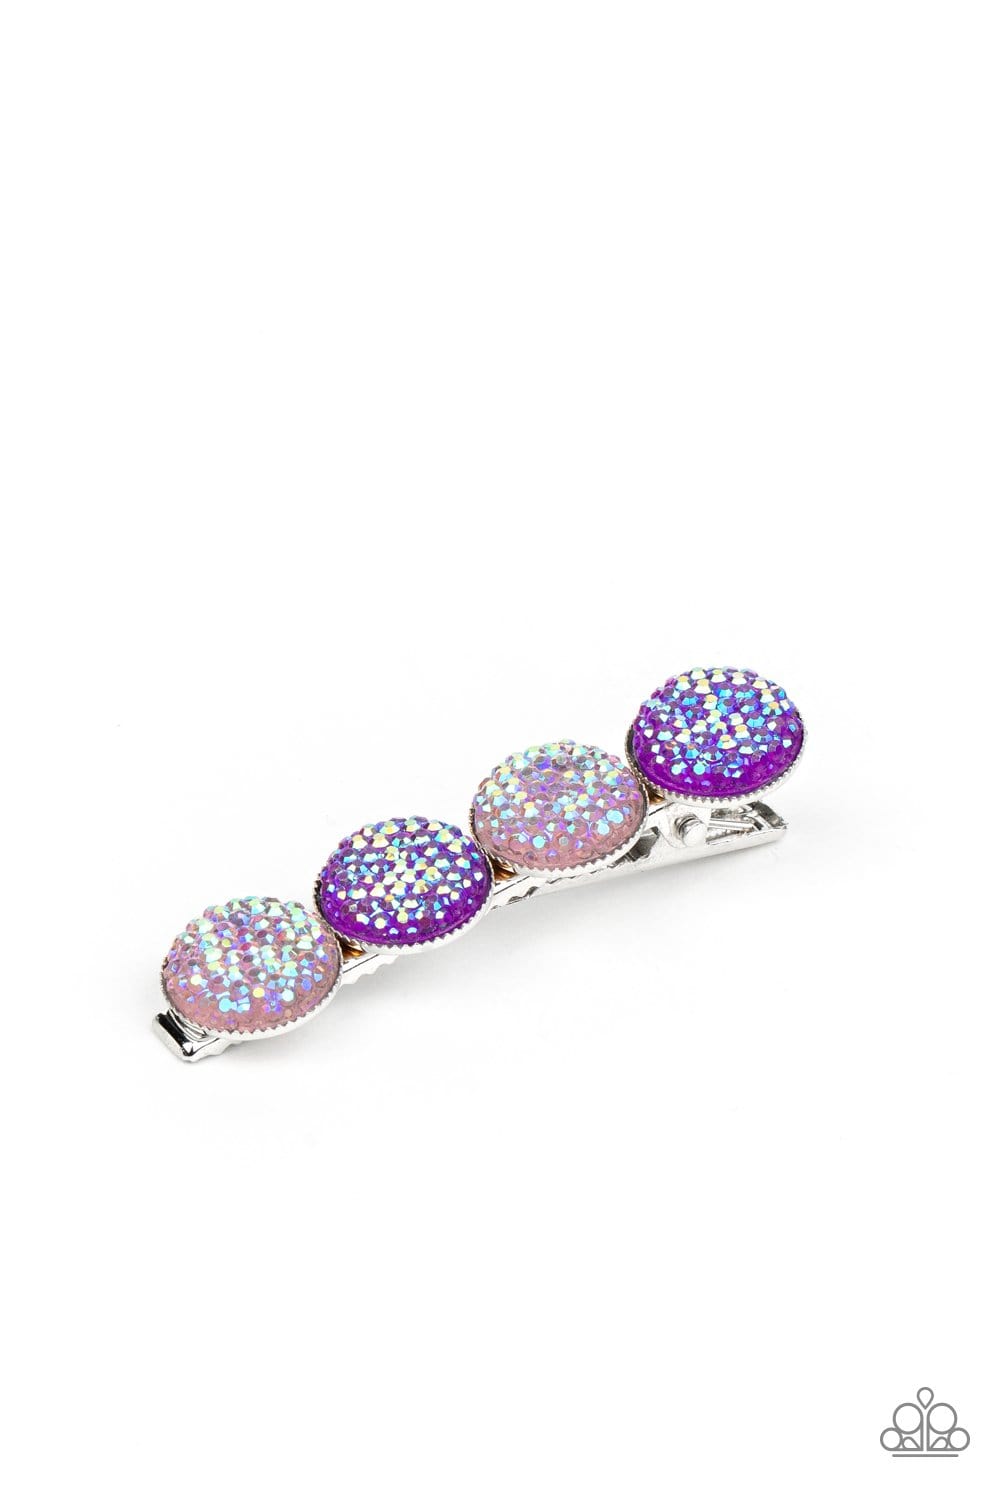 Paparazzi: When GLEAMS Come True - Purple Hair Clip - Jewels N’ Thingz Boutique